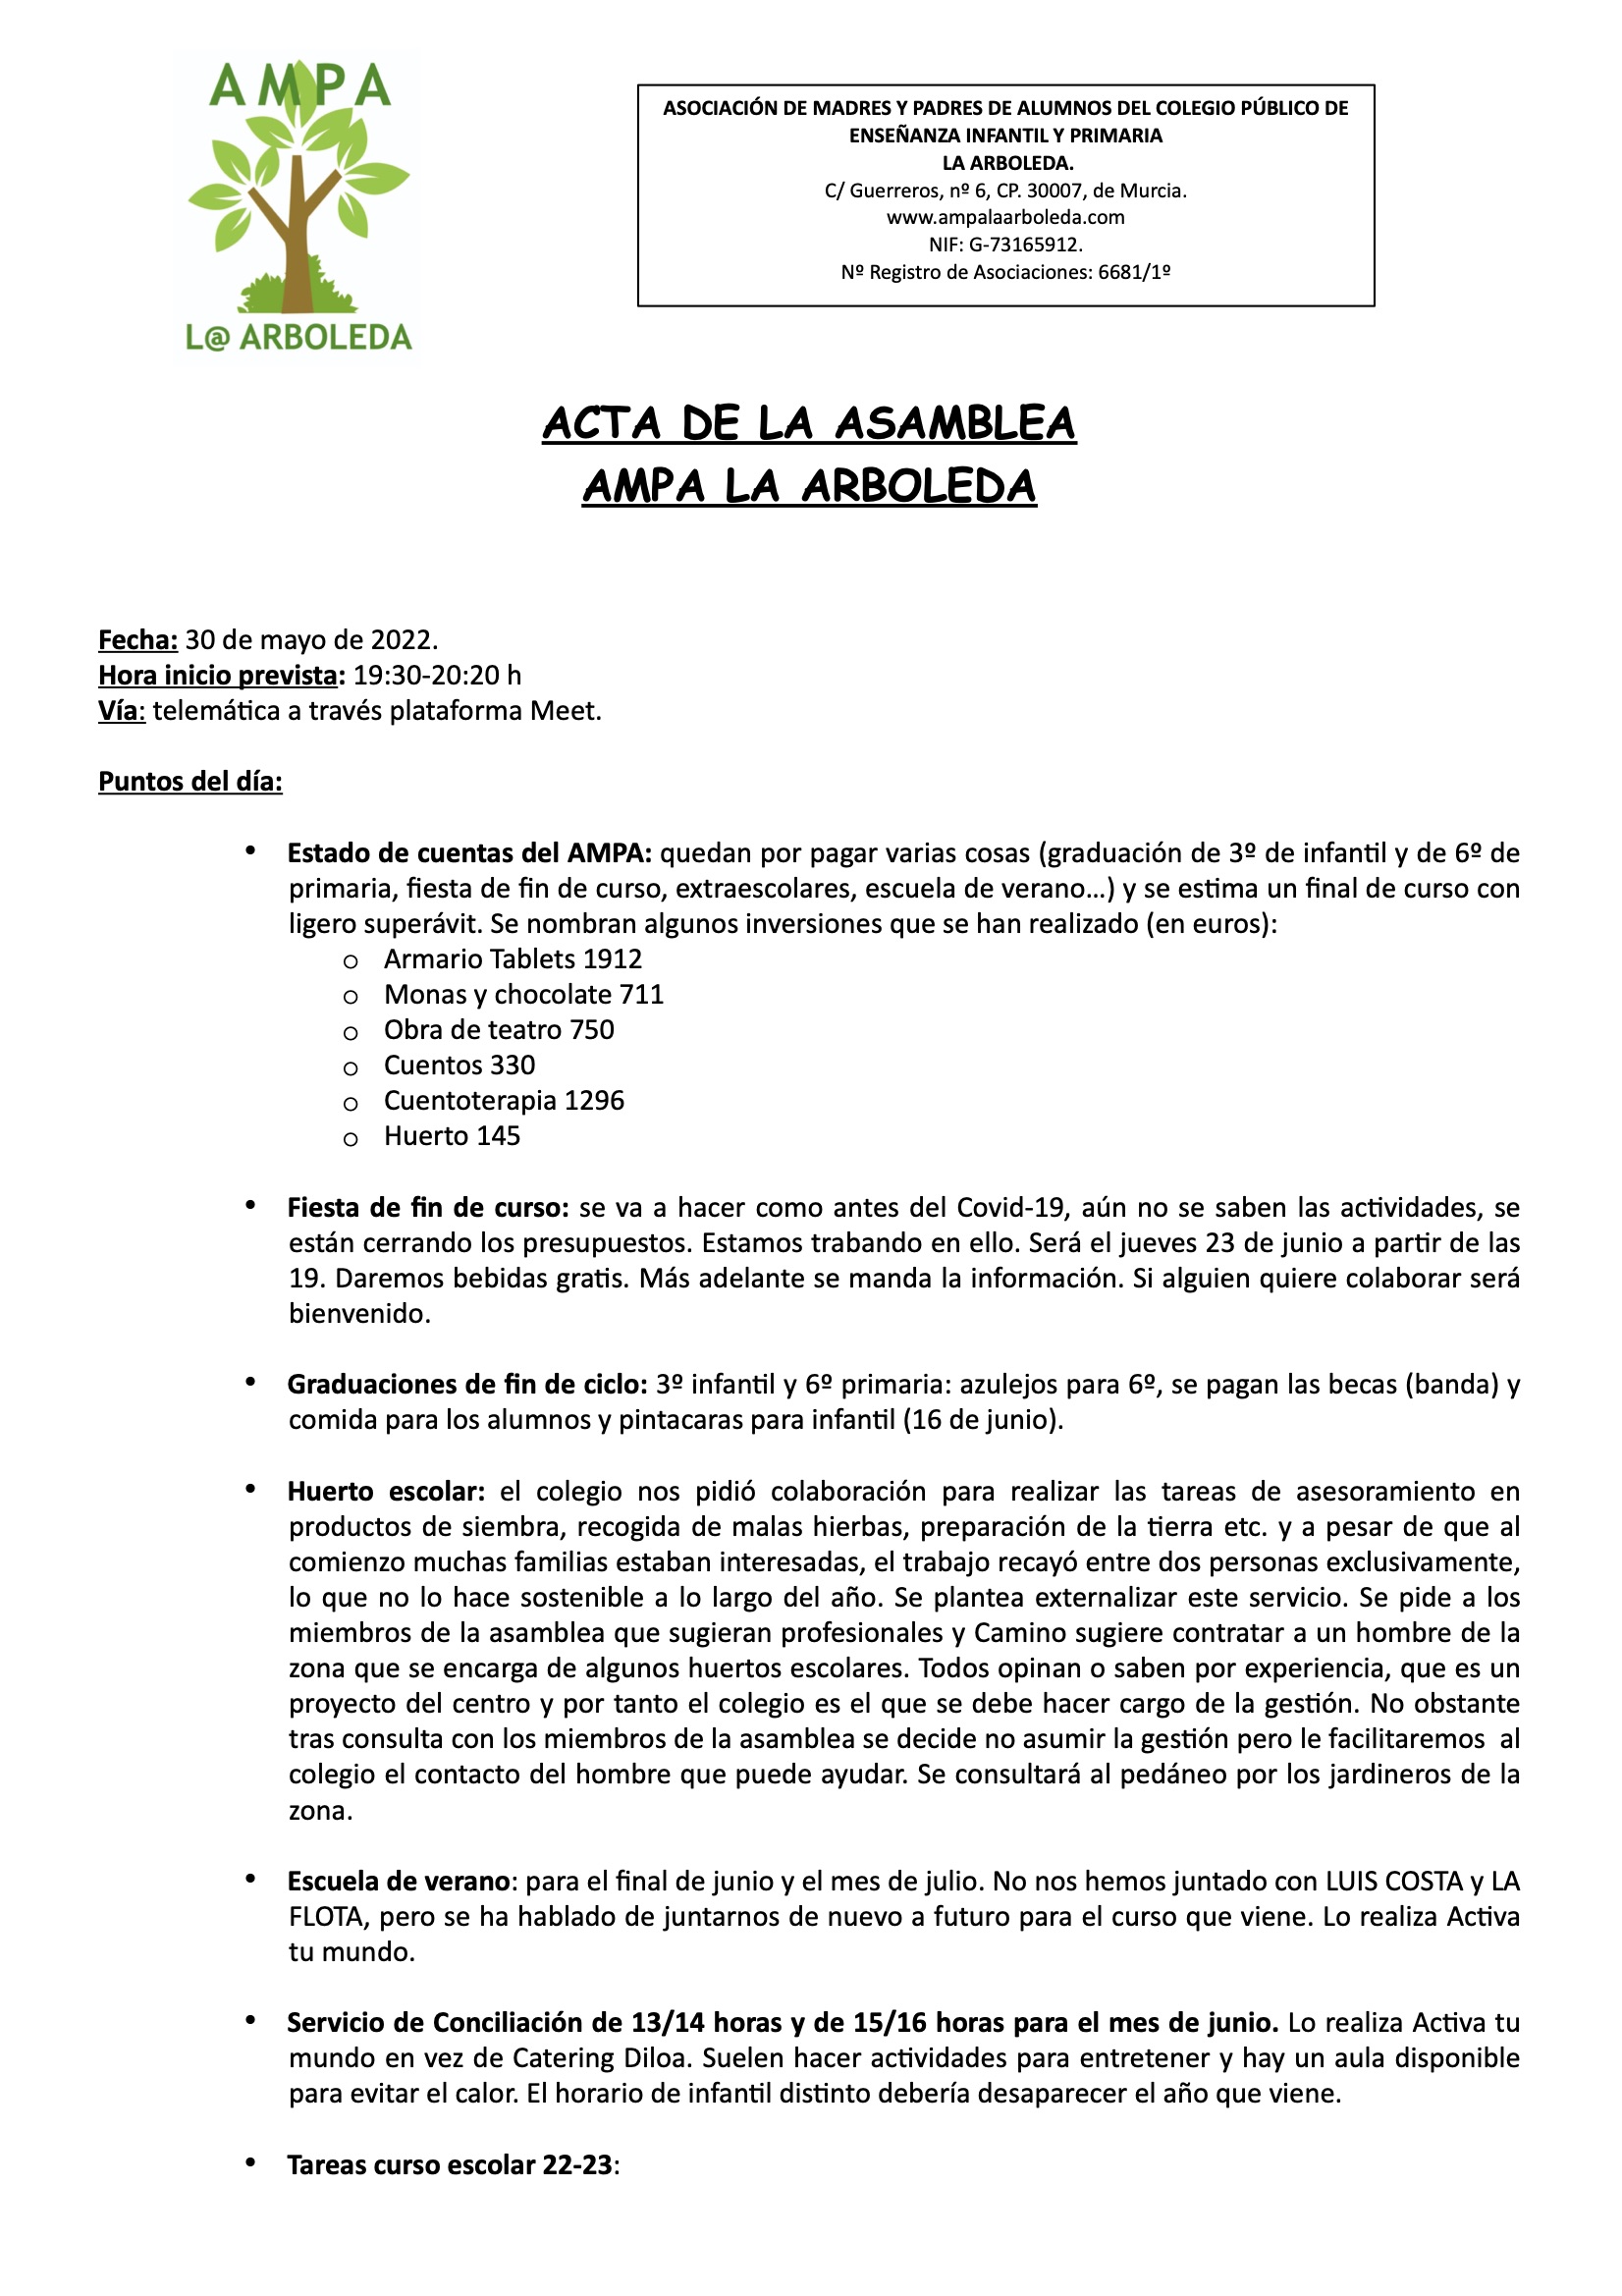 ACTA ASAMBLEA mayo 2022 - 1